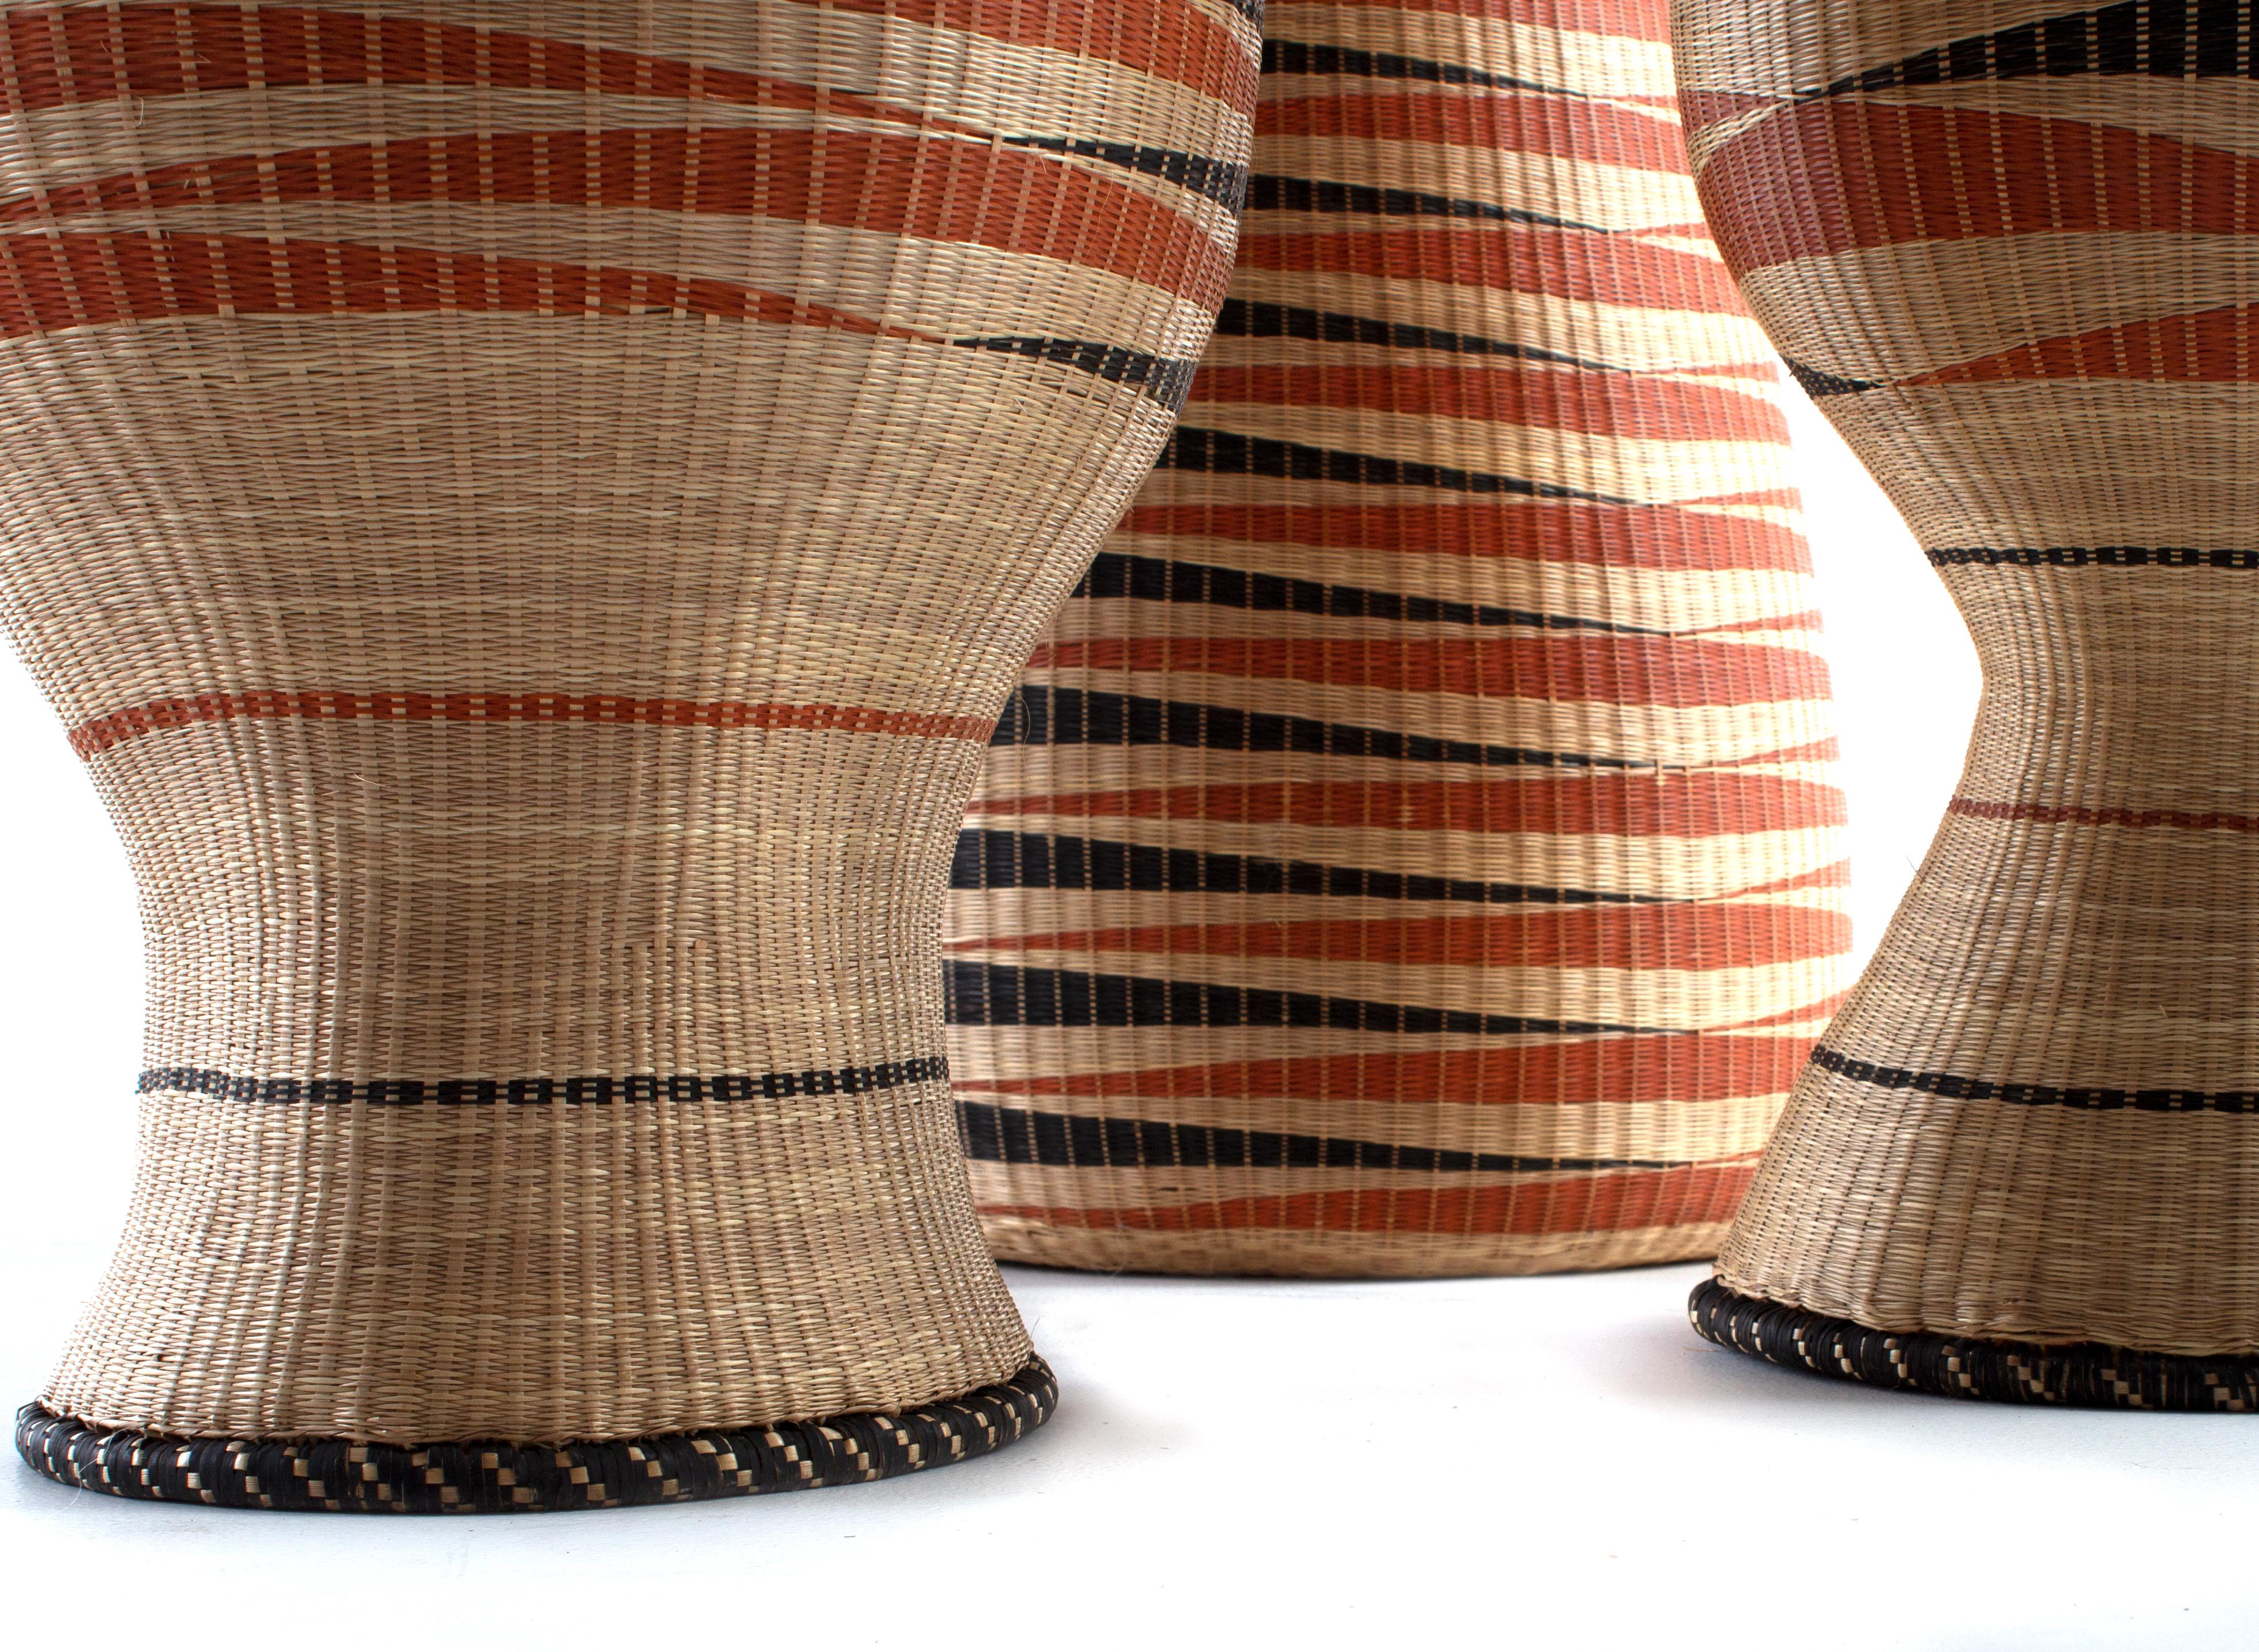 Set of three Rwandan Folk Art baskets.

Sold as a set of Three